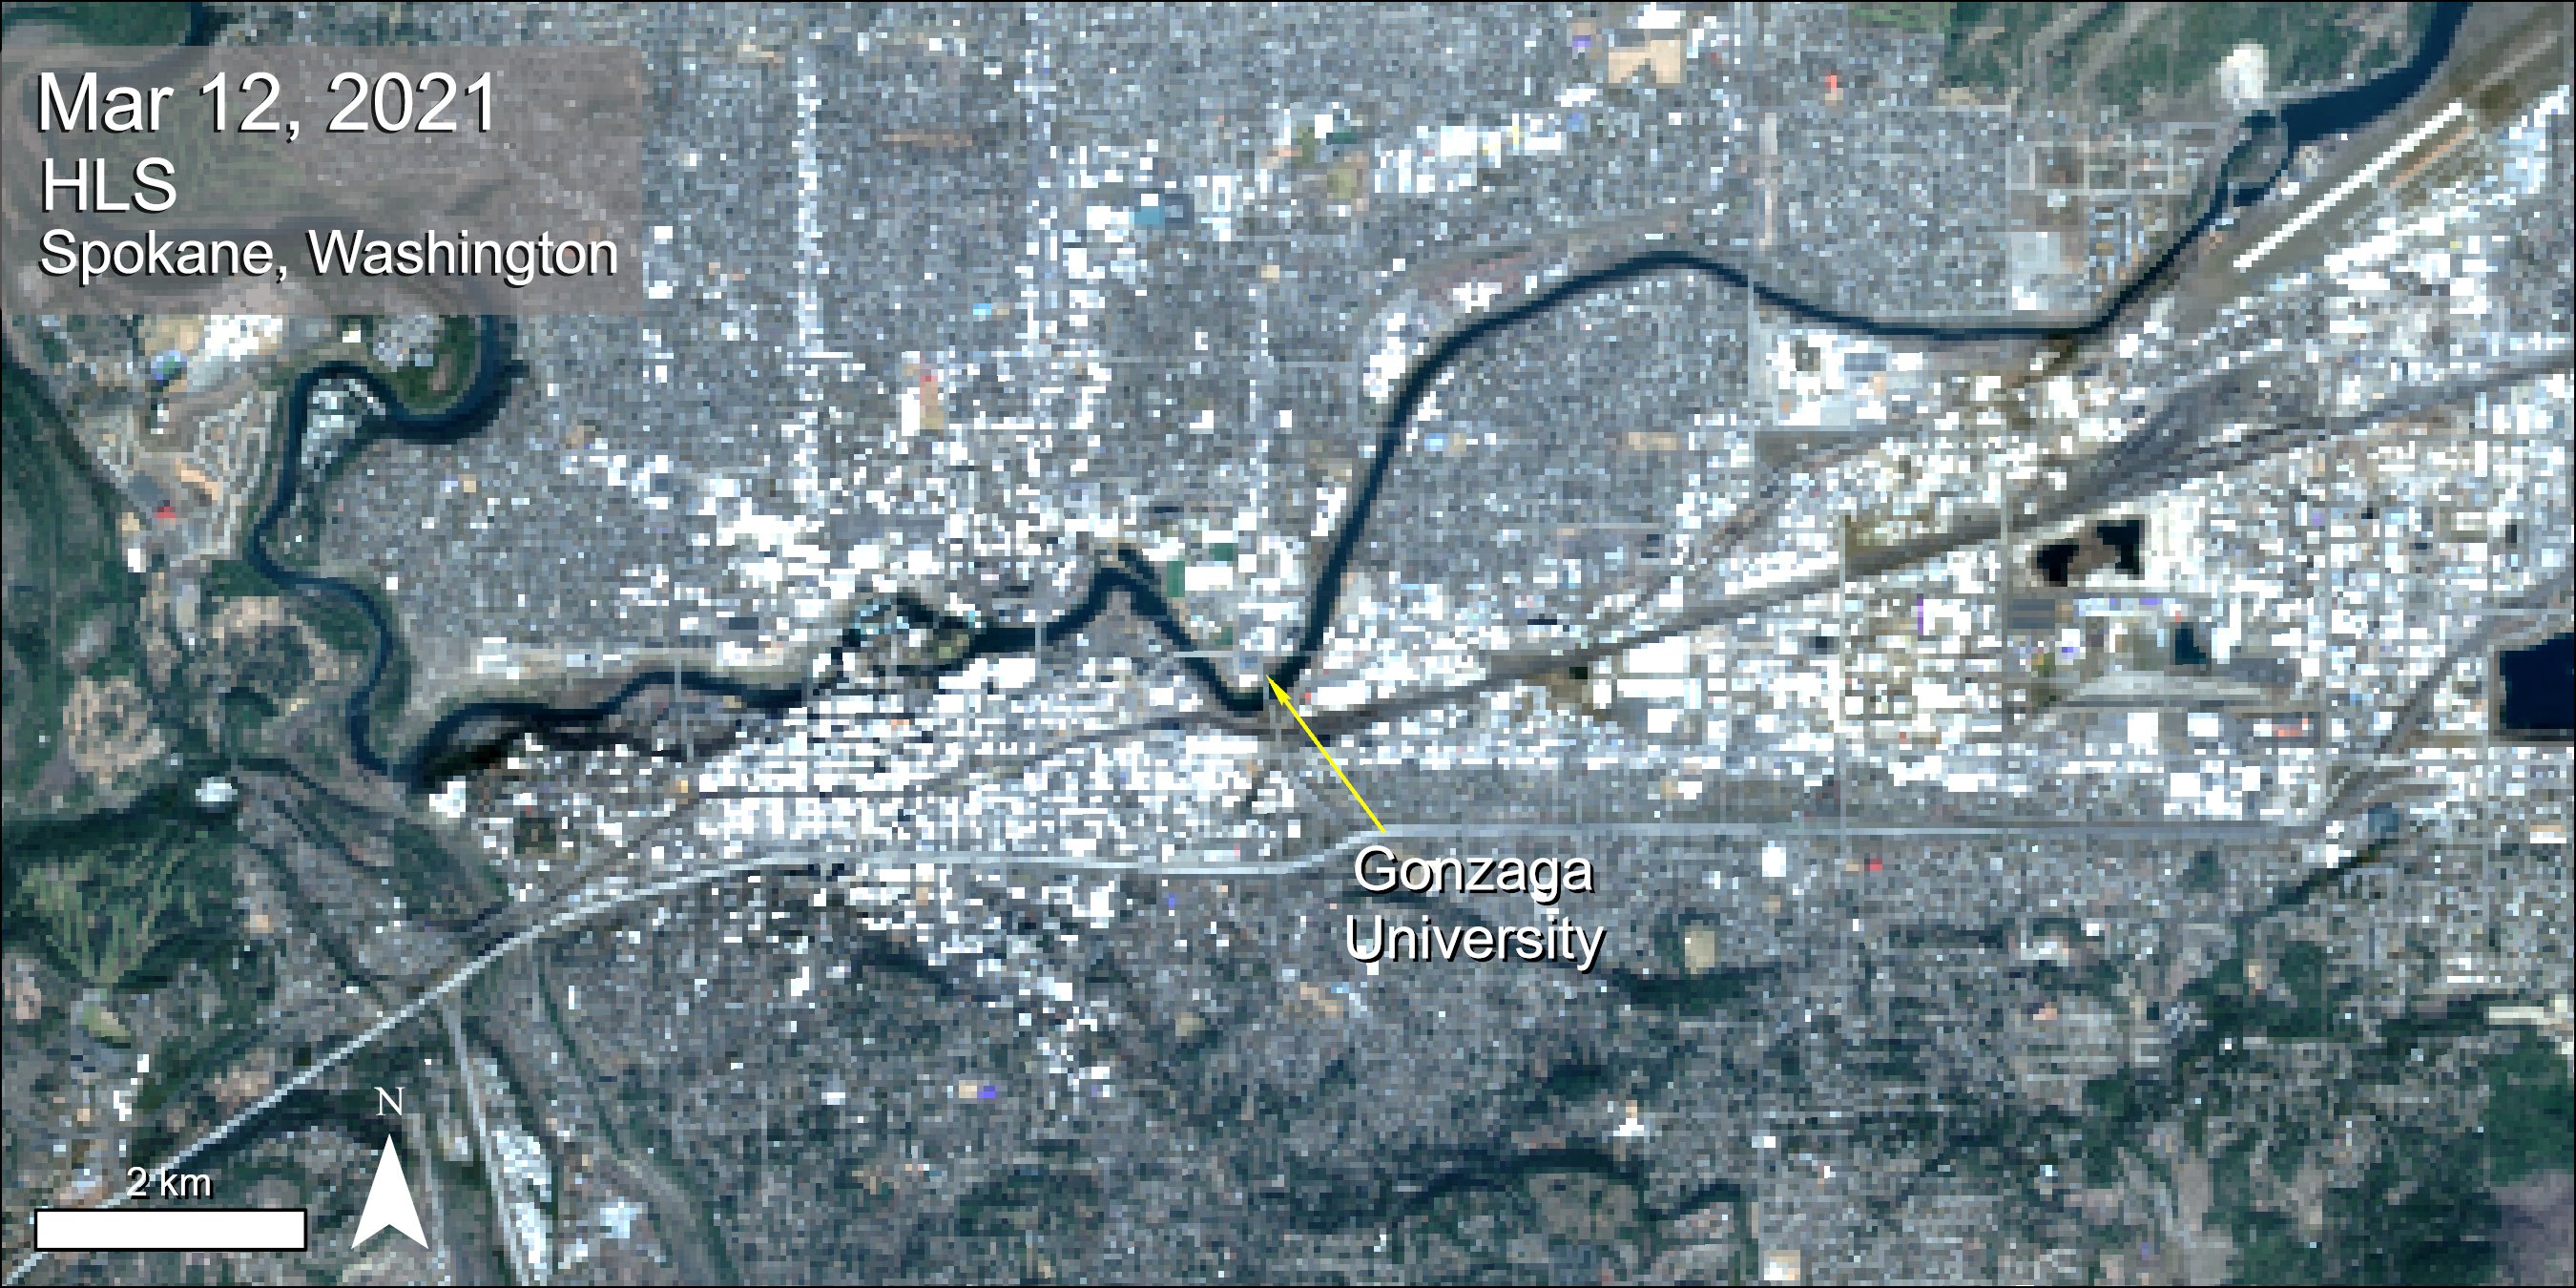 HLS surface reflectance data over Spokane, Washington.